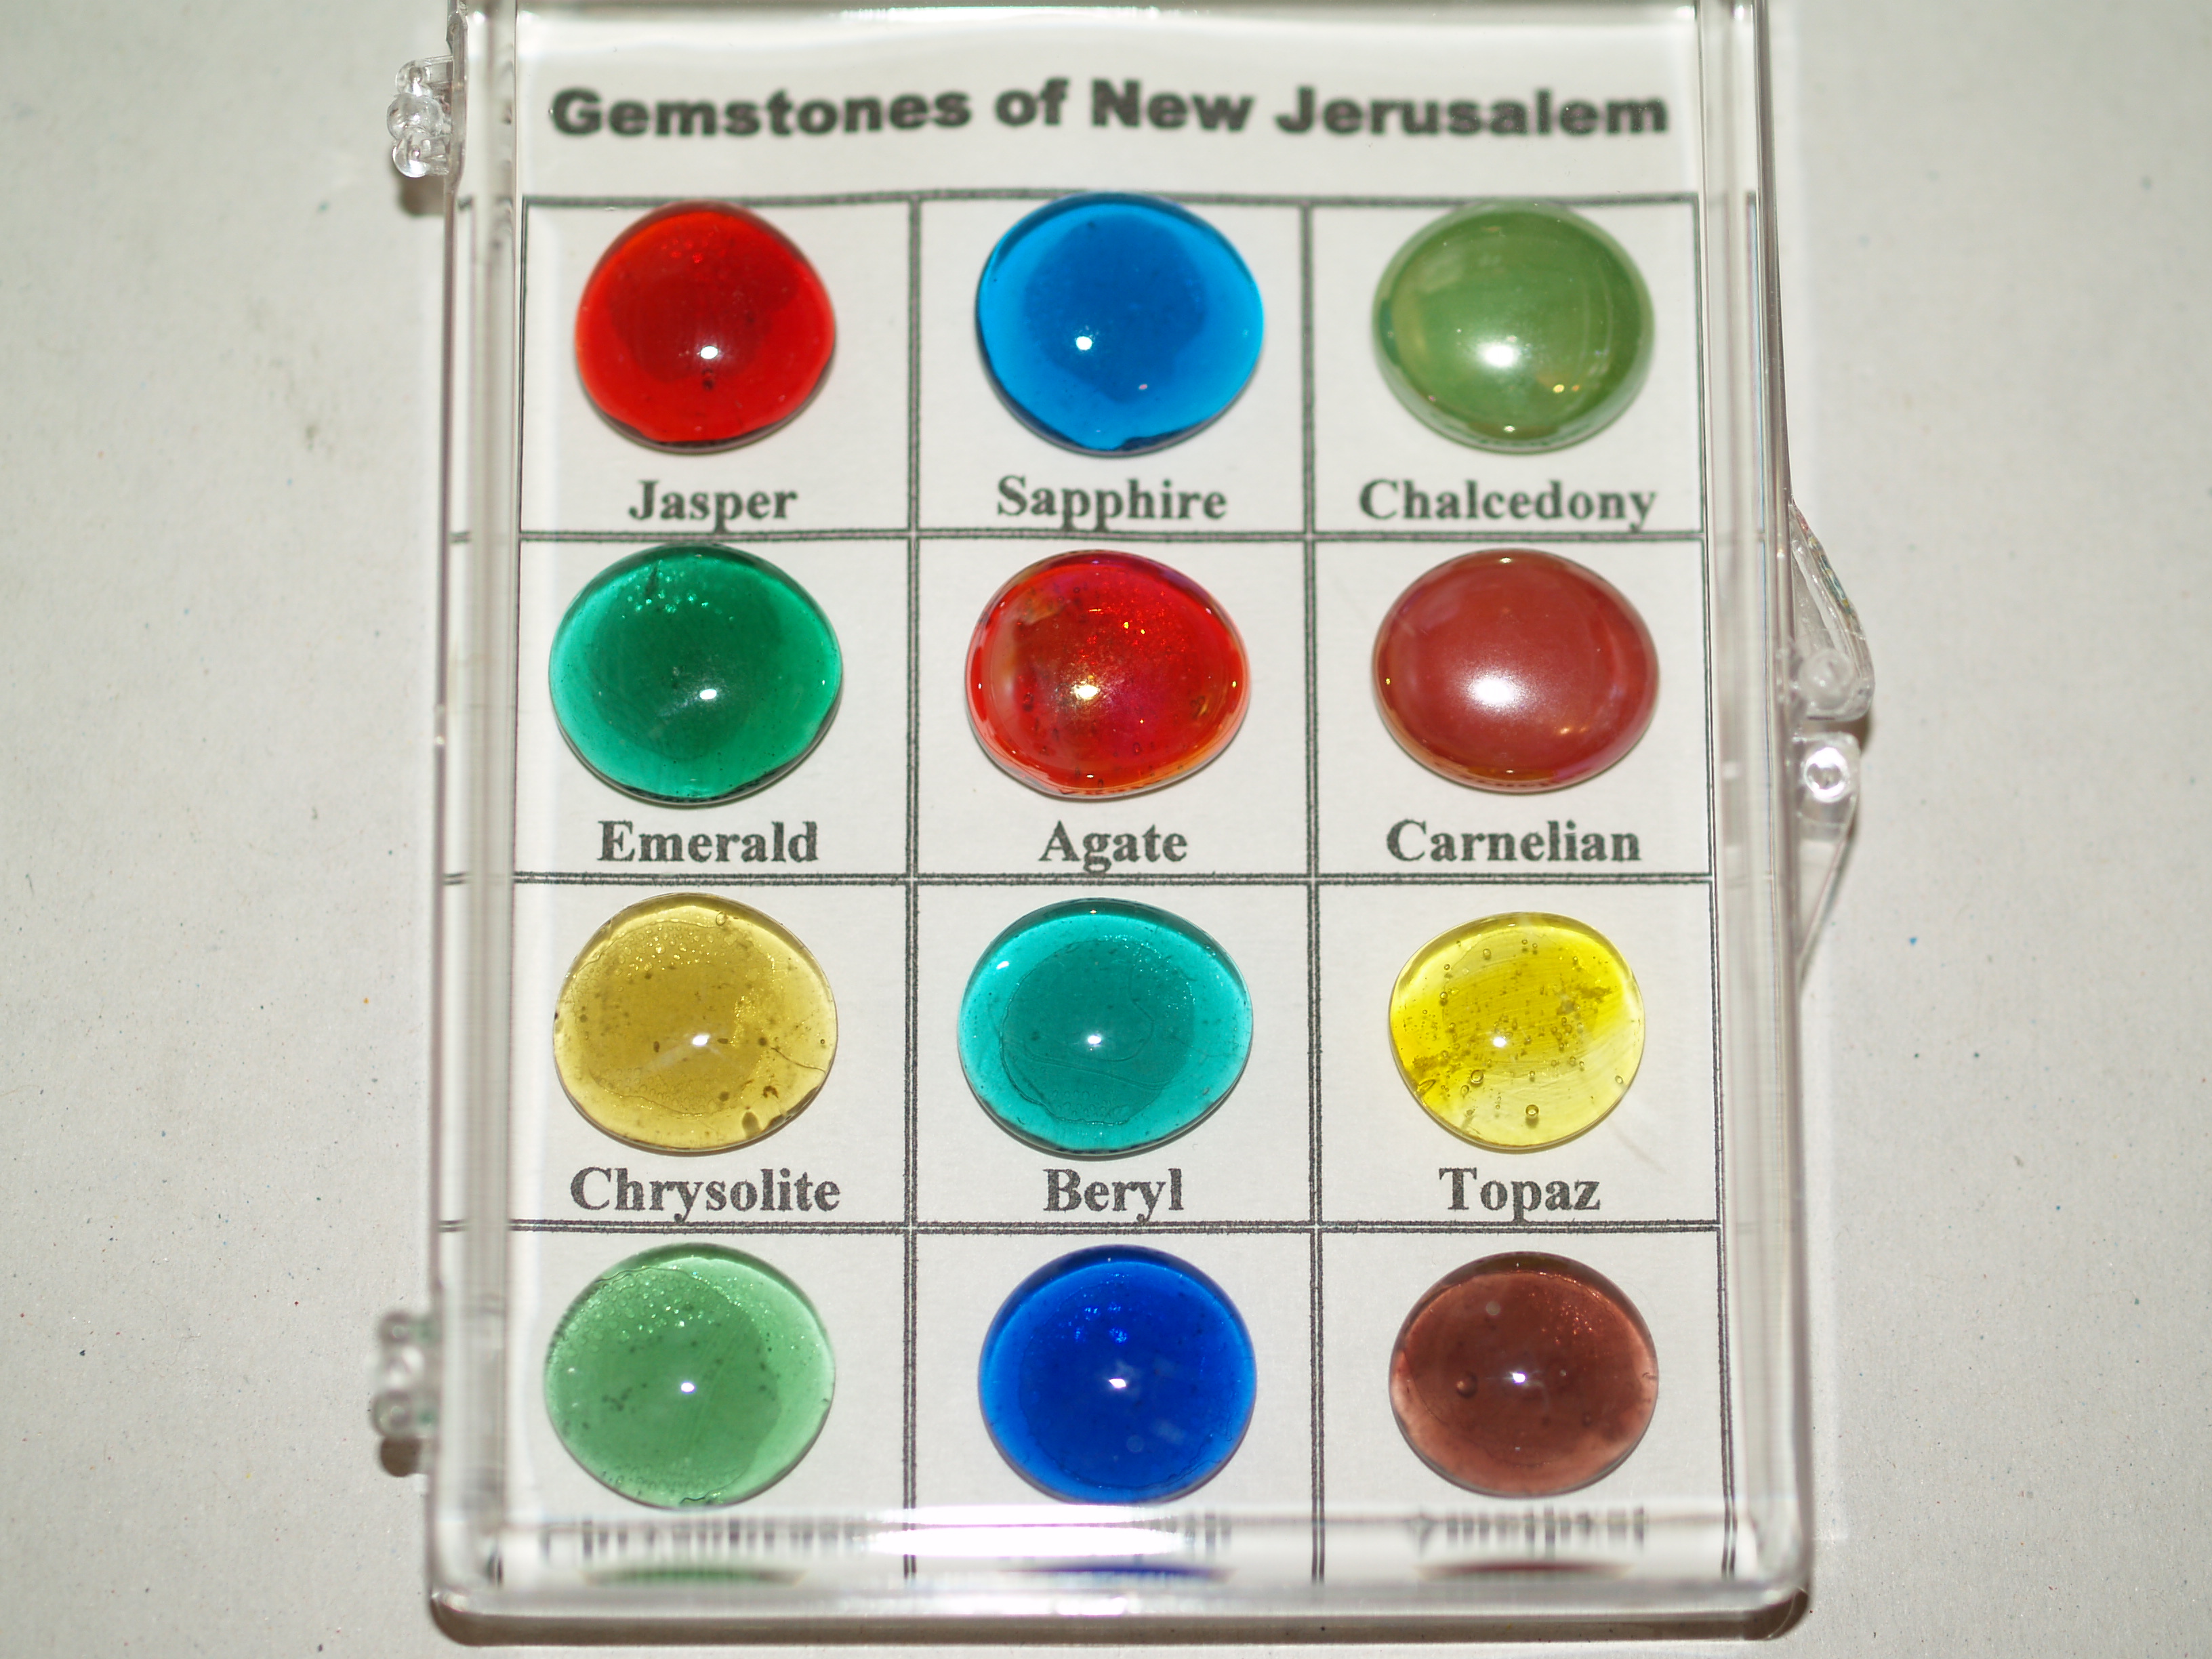 Gemstones of New Jerusalem: Simulated Stones